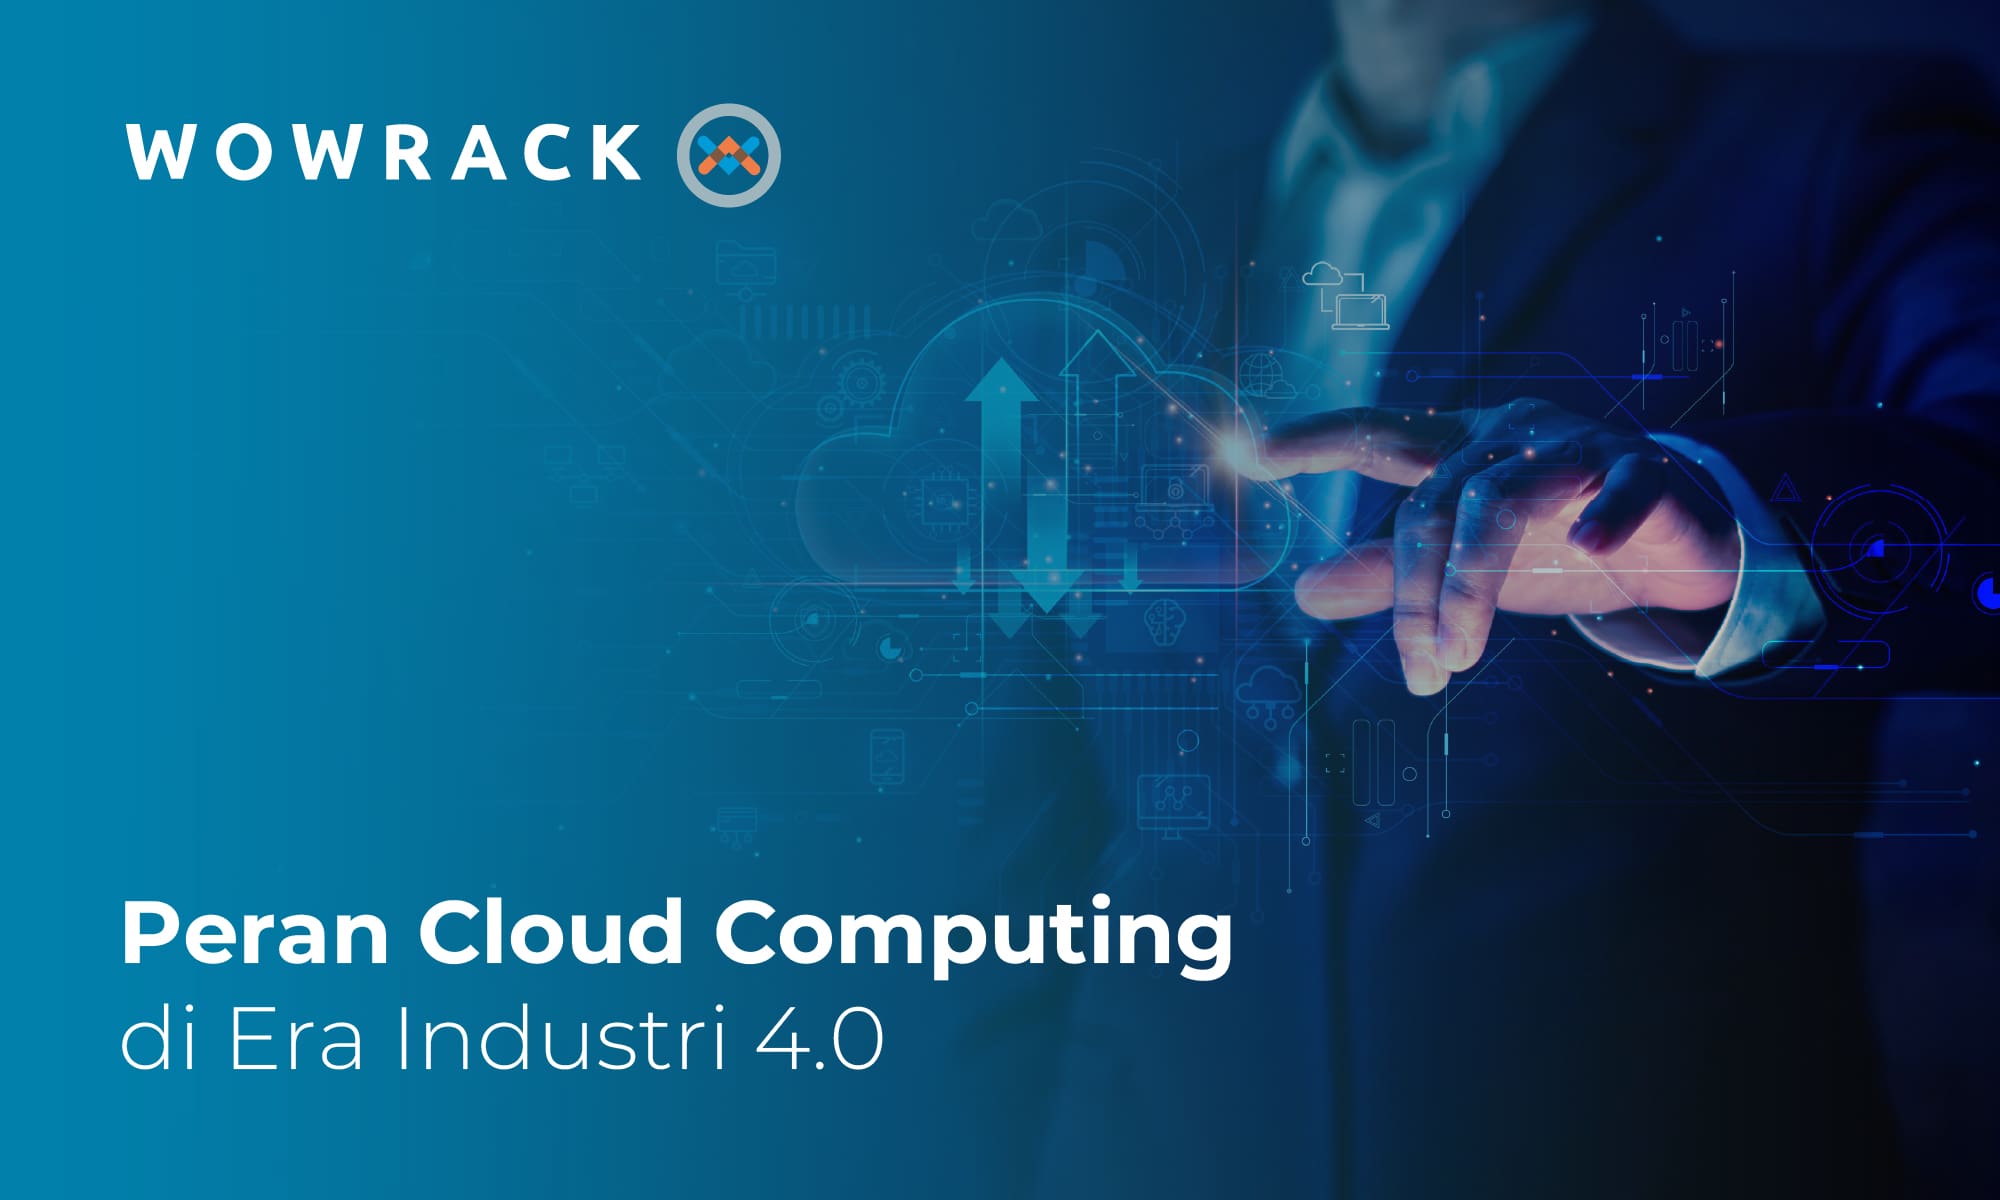 Peran-Cloud-Computing-di-Era-Industri-4.0@2x-100